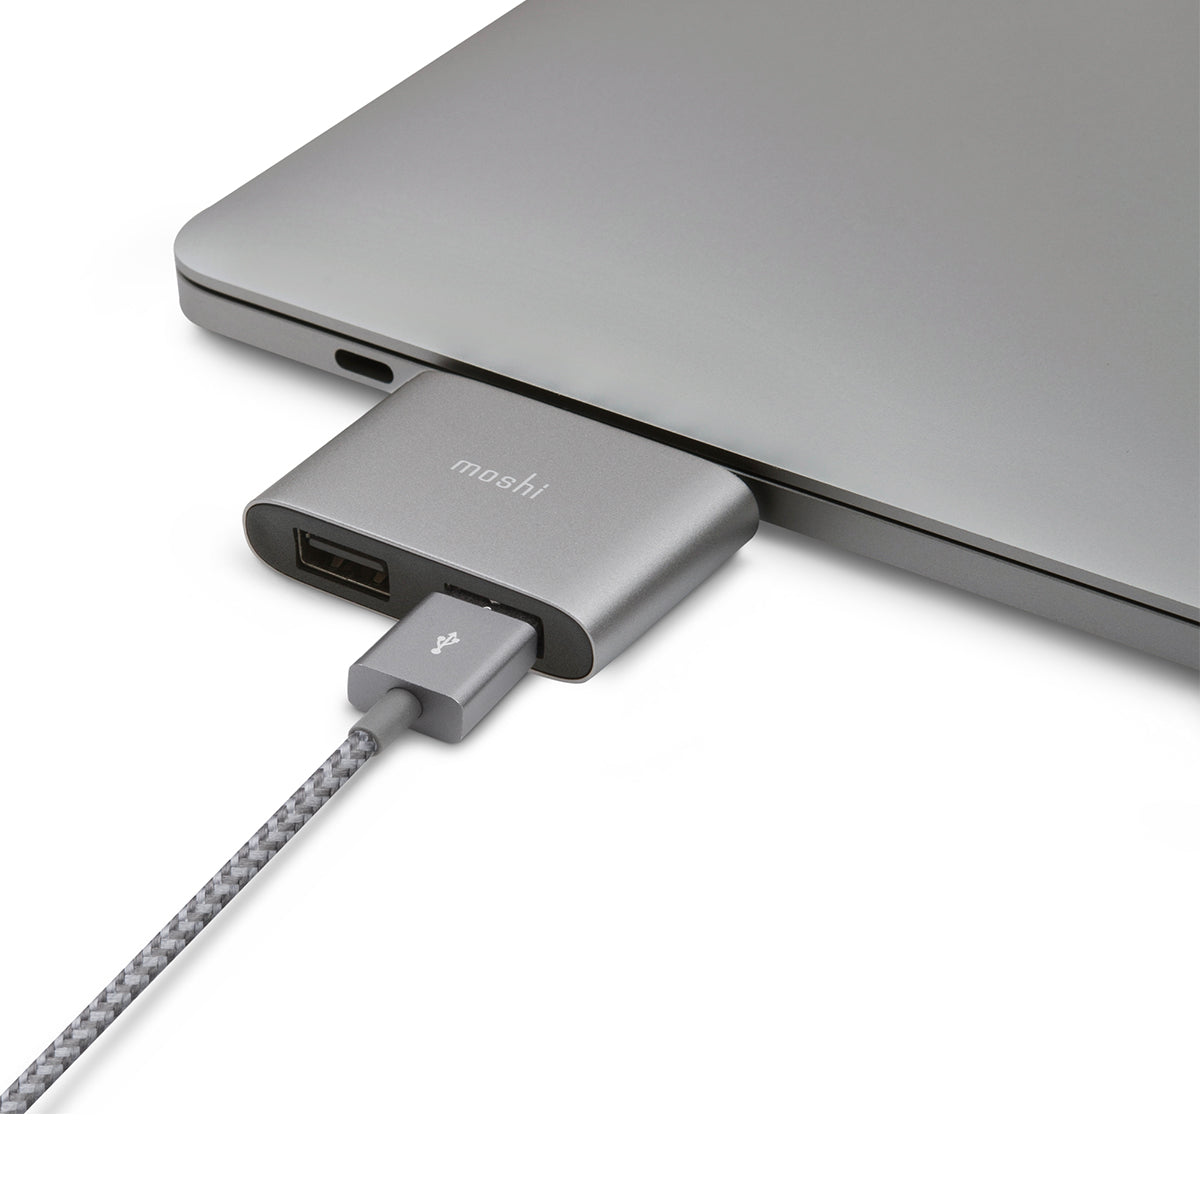 MOSHI USB C to Dual USB A Adapter - Titanium Gray